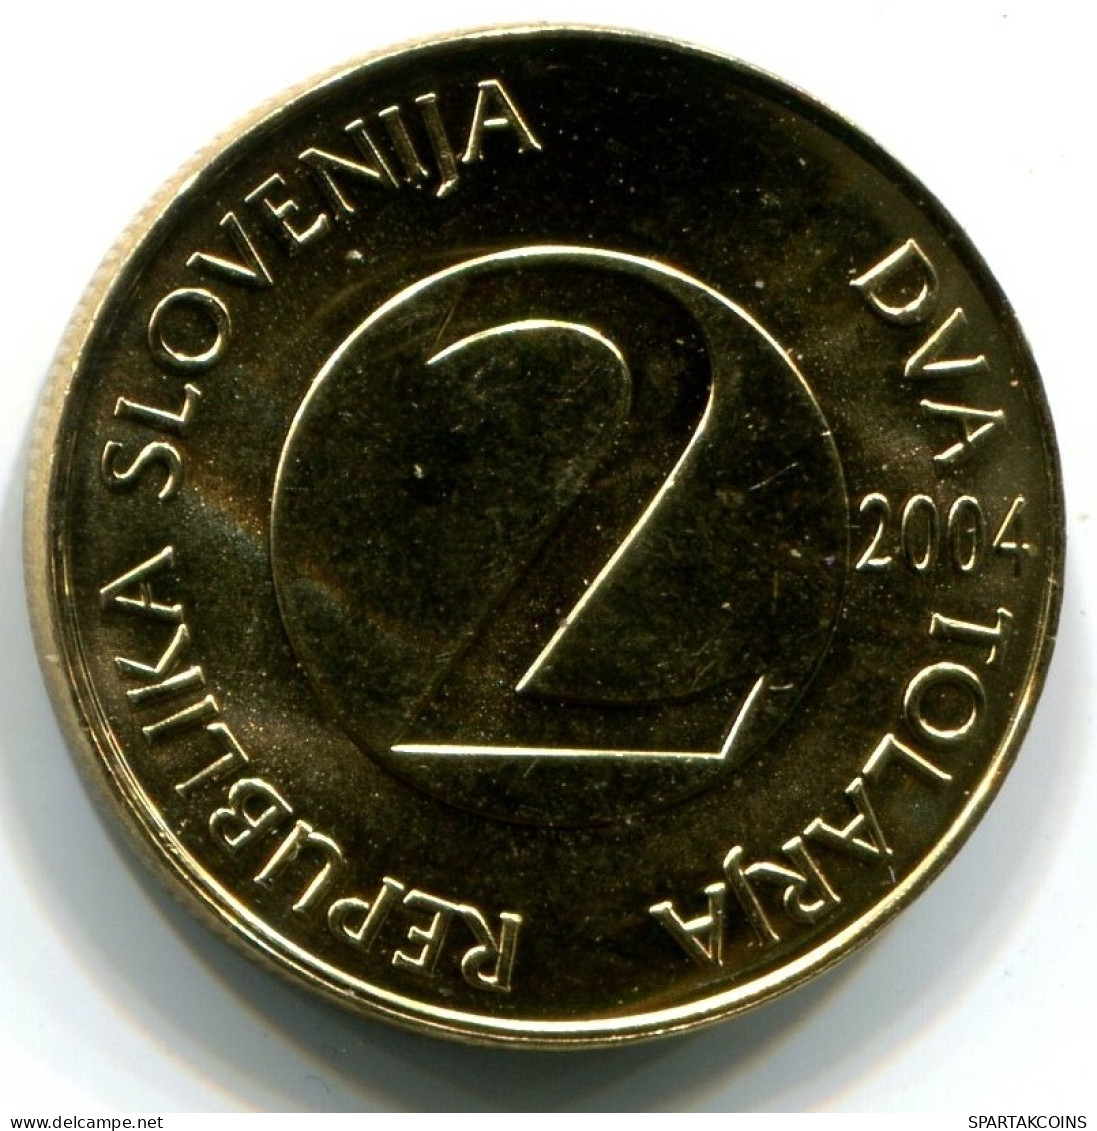 2 TOLAR 1998 SLOVENIA UNC Coin #W11153.U.A - Slovenia